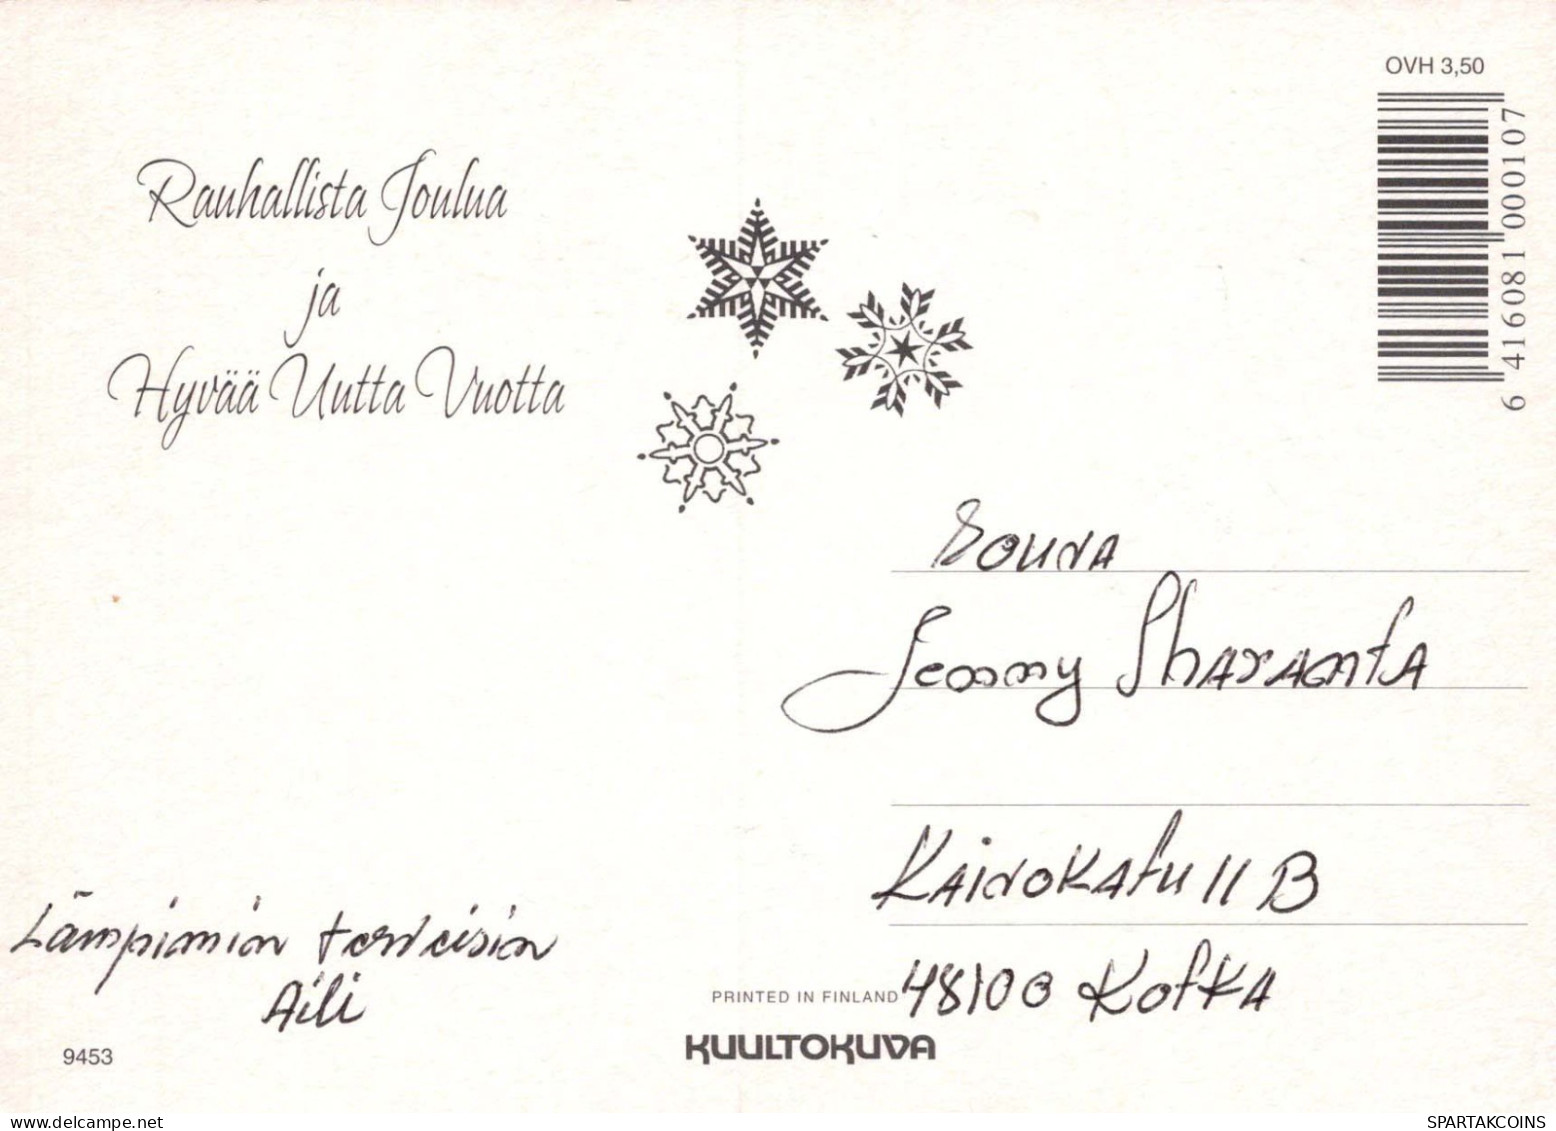 Buon Anno Natale BELL CANDELA Vintage Cartolina CPSM #PAV394.A - Nouvel An